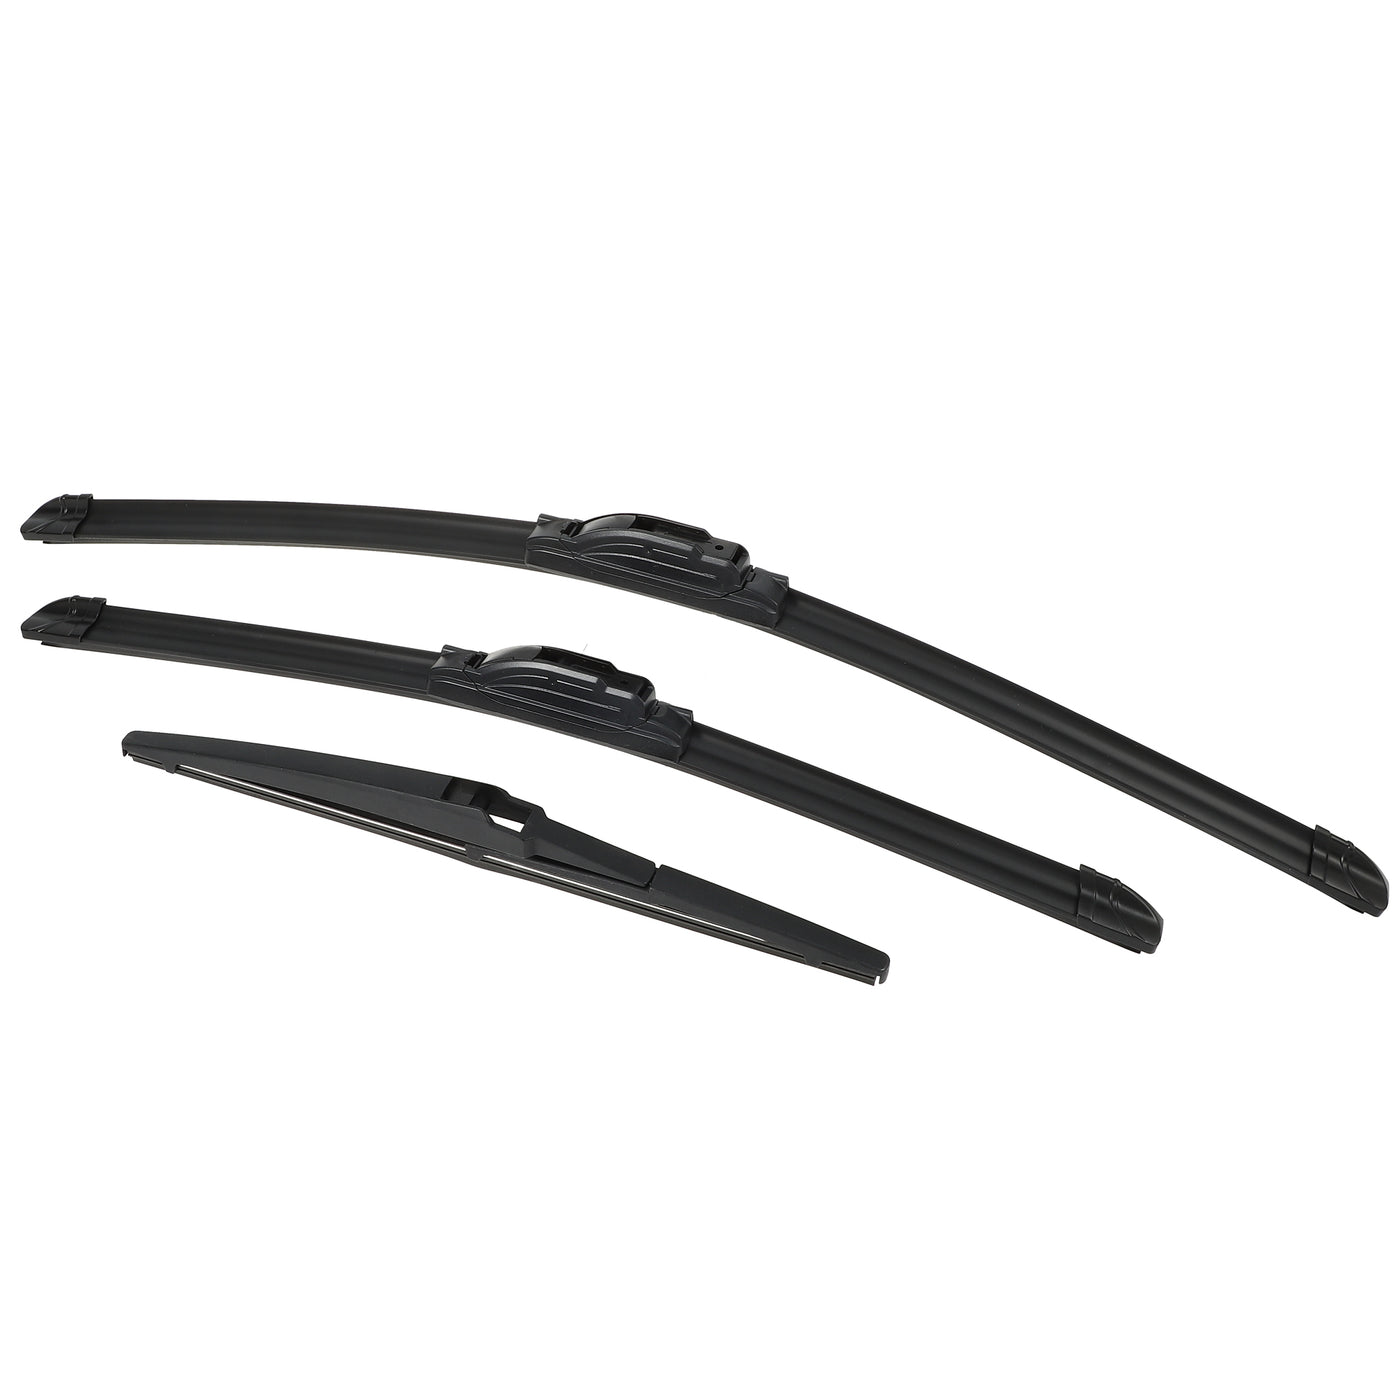 ACROPIX Front Rear Windshield Wiper Blade Kit Car Wiper Blade Fit for Dodge Journey 2010-2014 - Pack of 3 Black